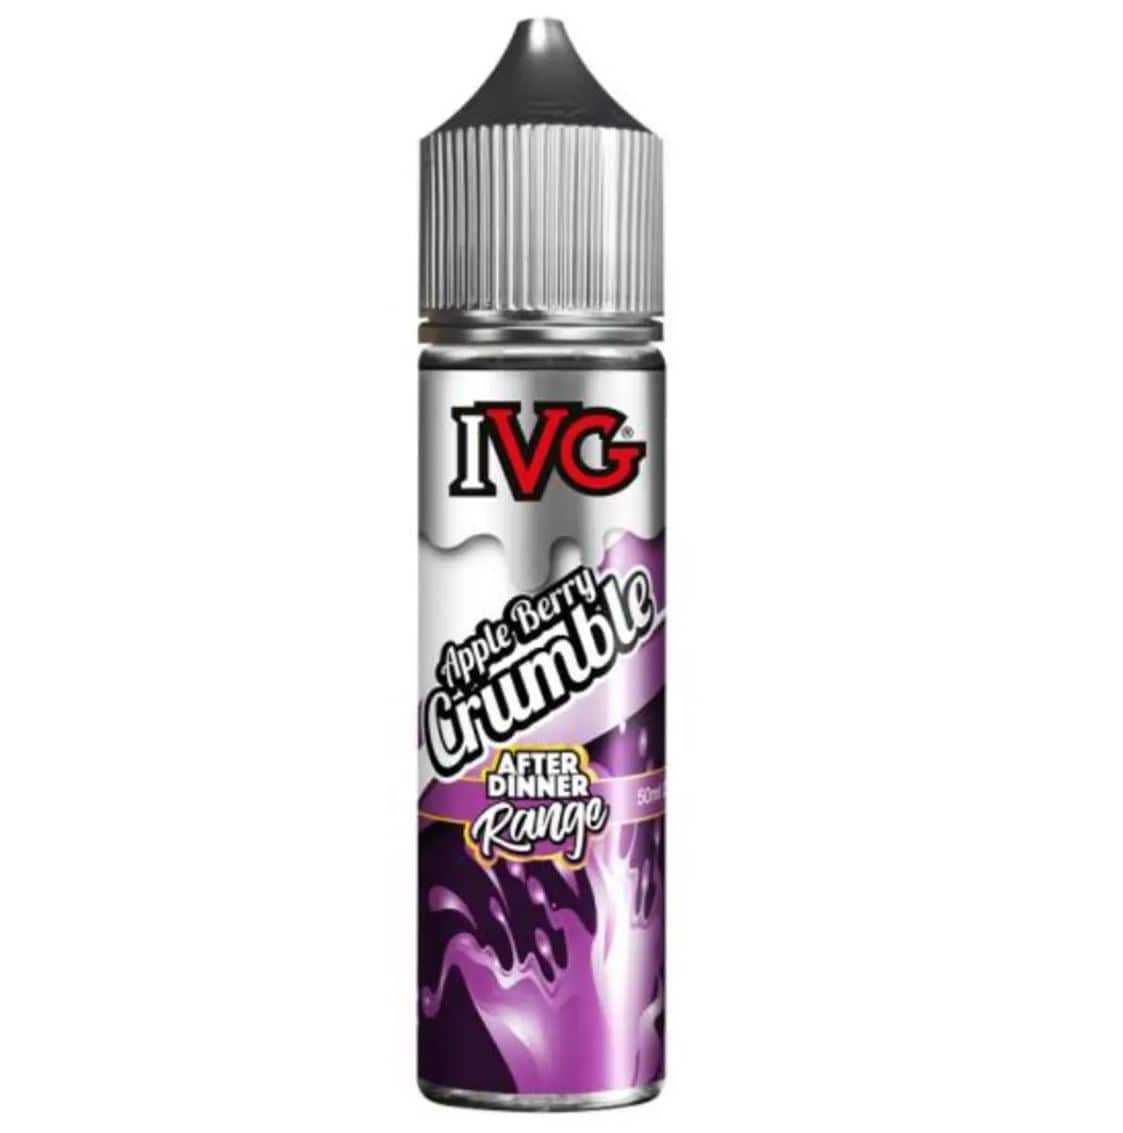 IVG - Apple Berry Crumble 50ml Shortfill E-Liquid - The British Vape Company